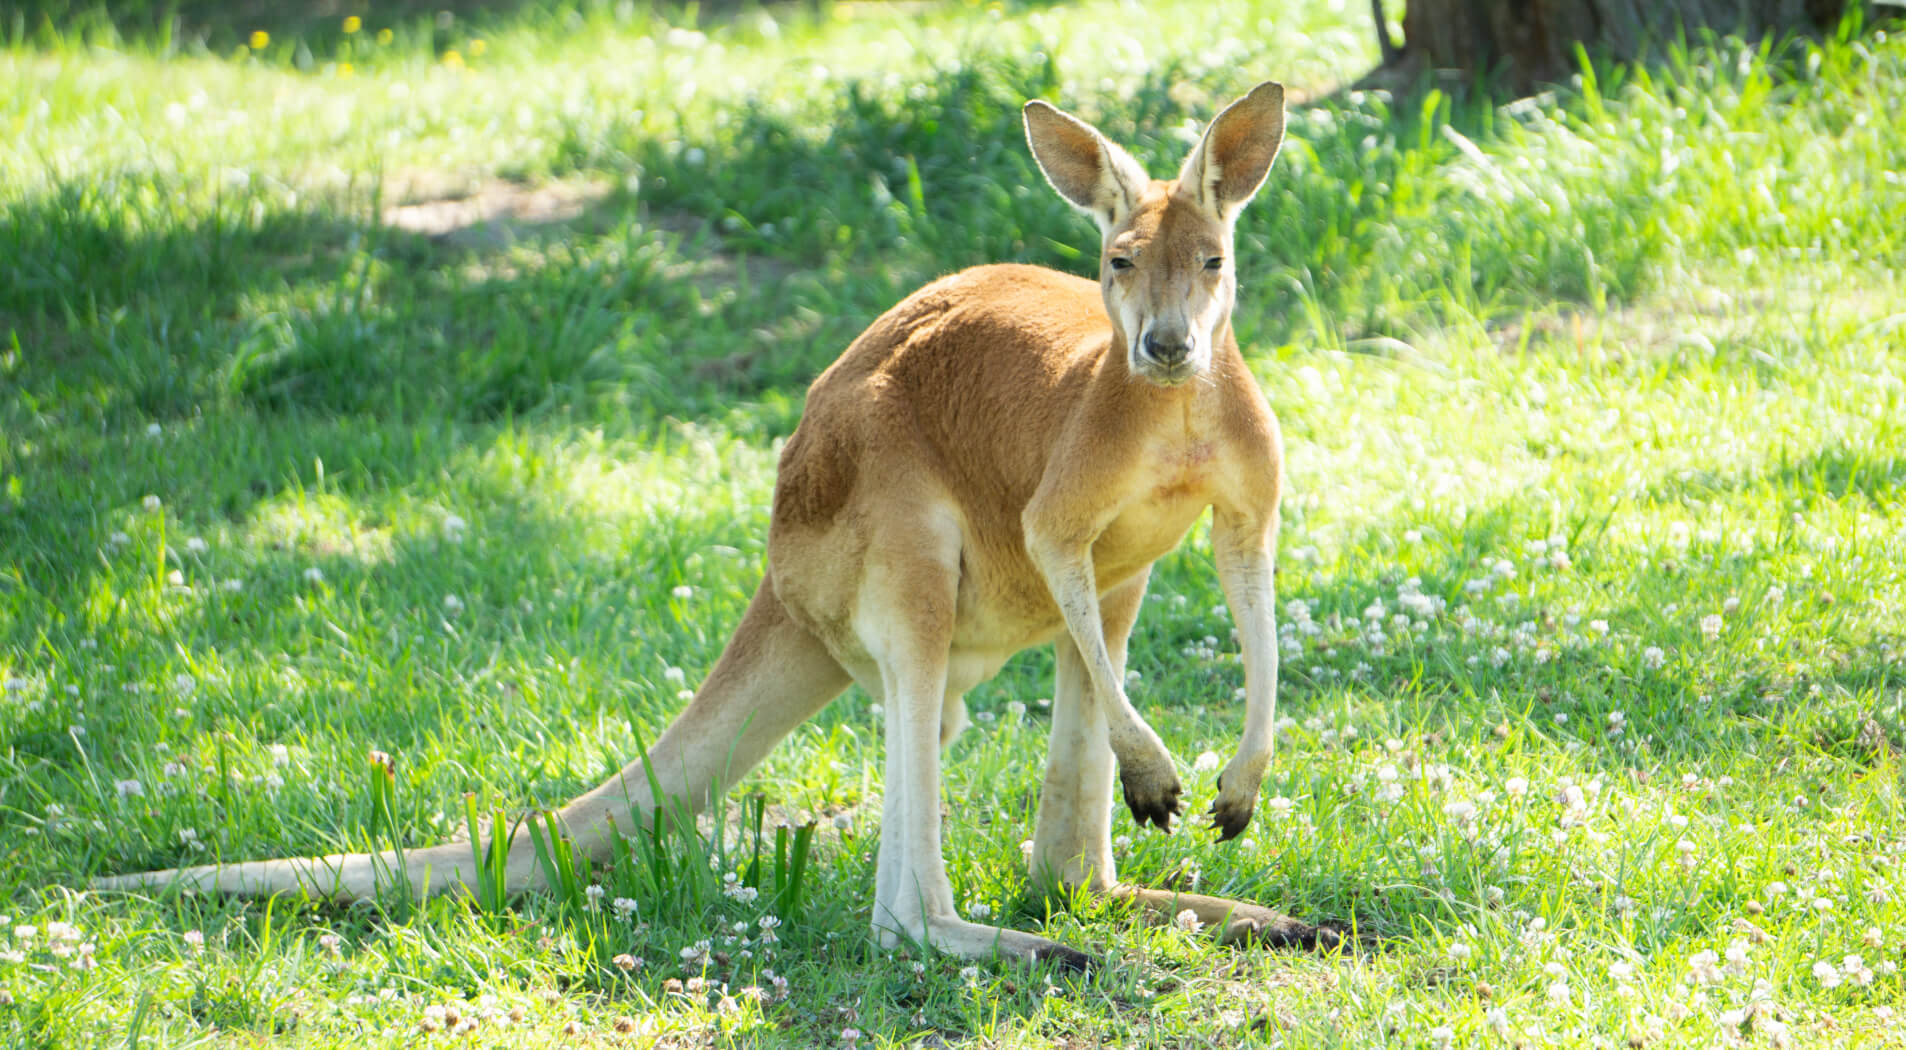 Coming Soon - Kangaroo Walk-About